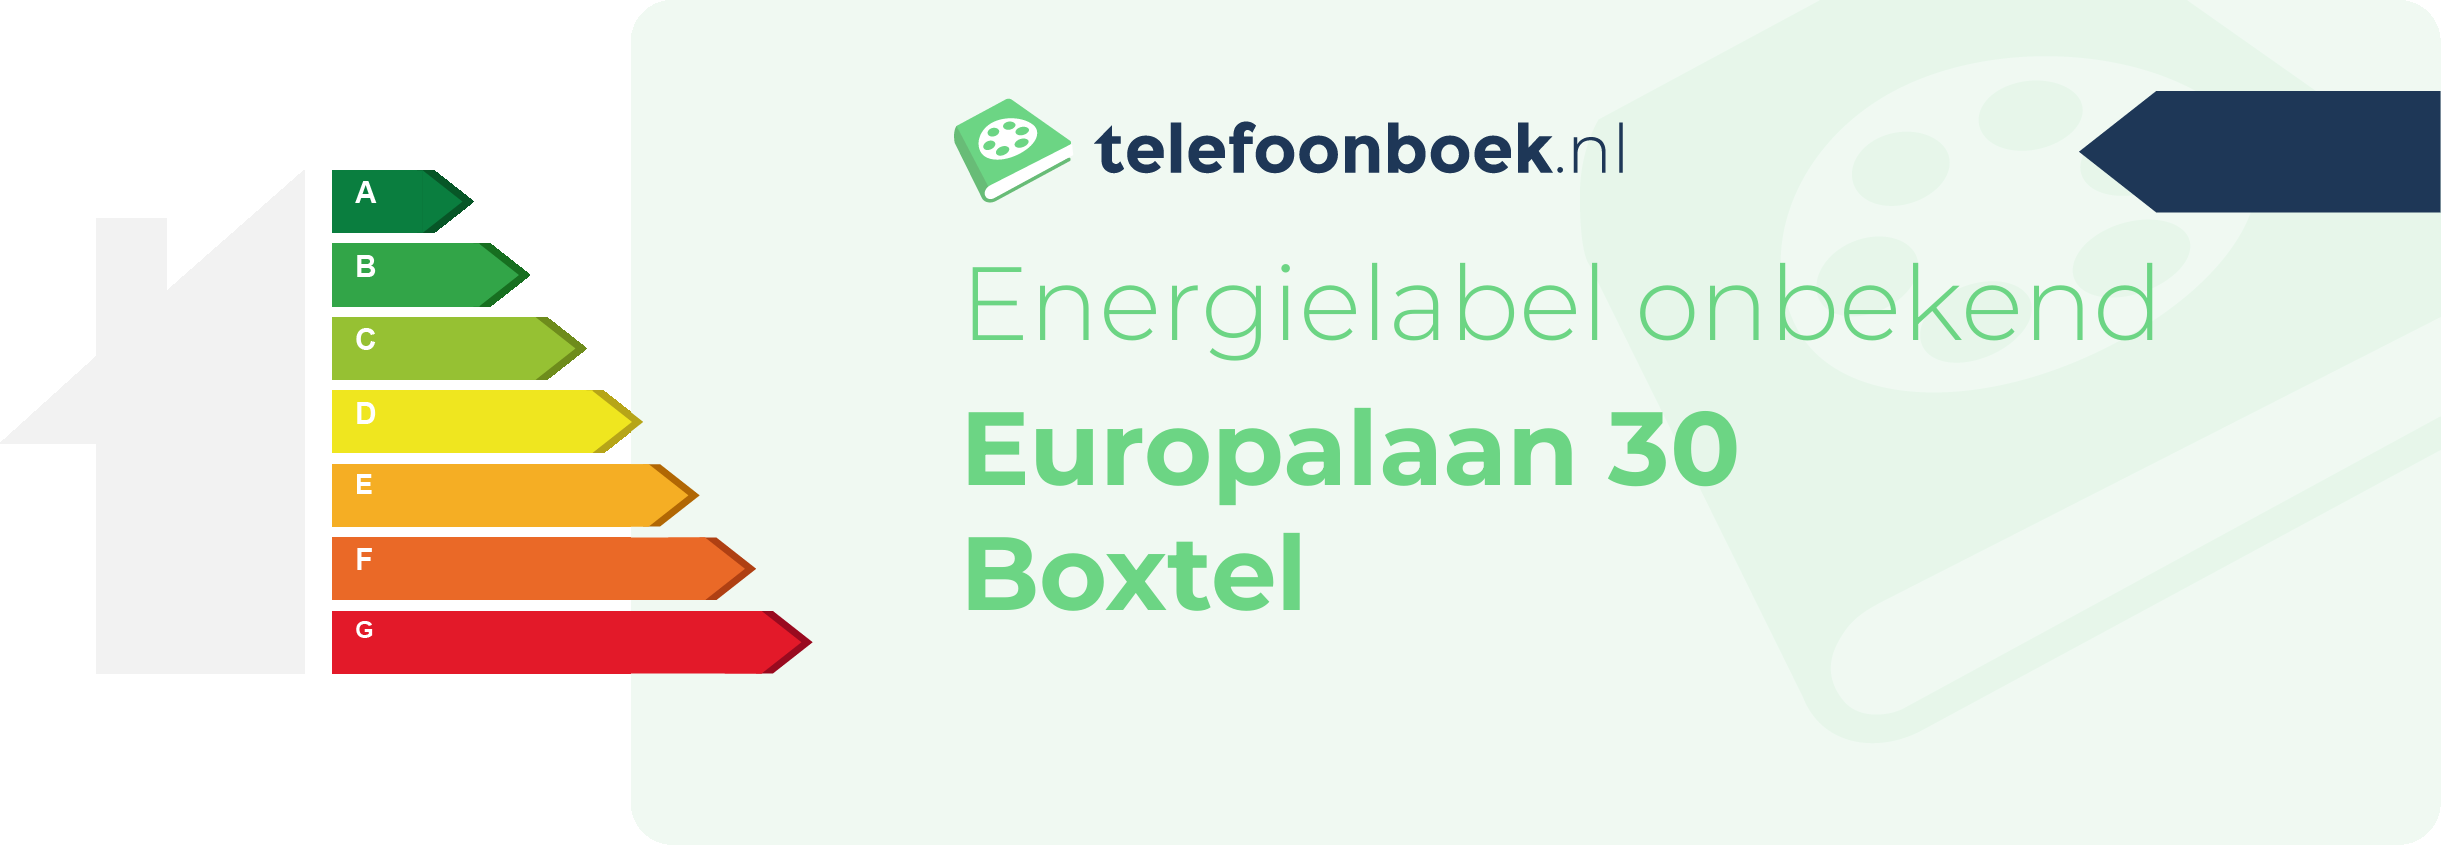 Energielabel Europalaan 30 Boxtel